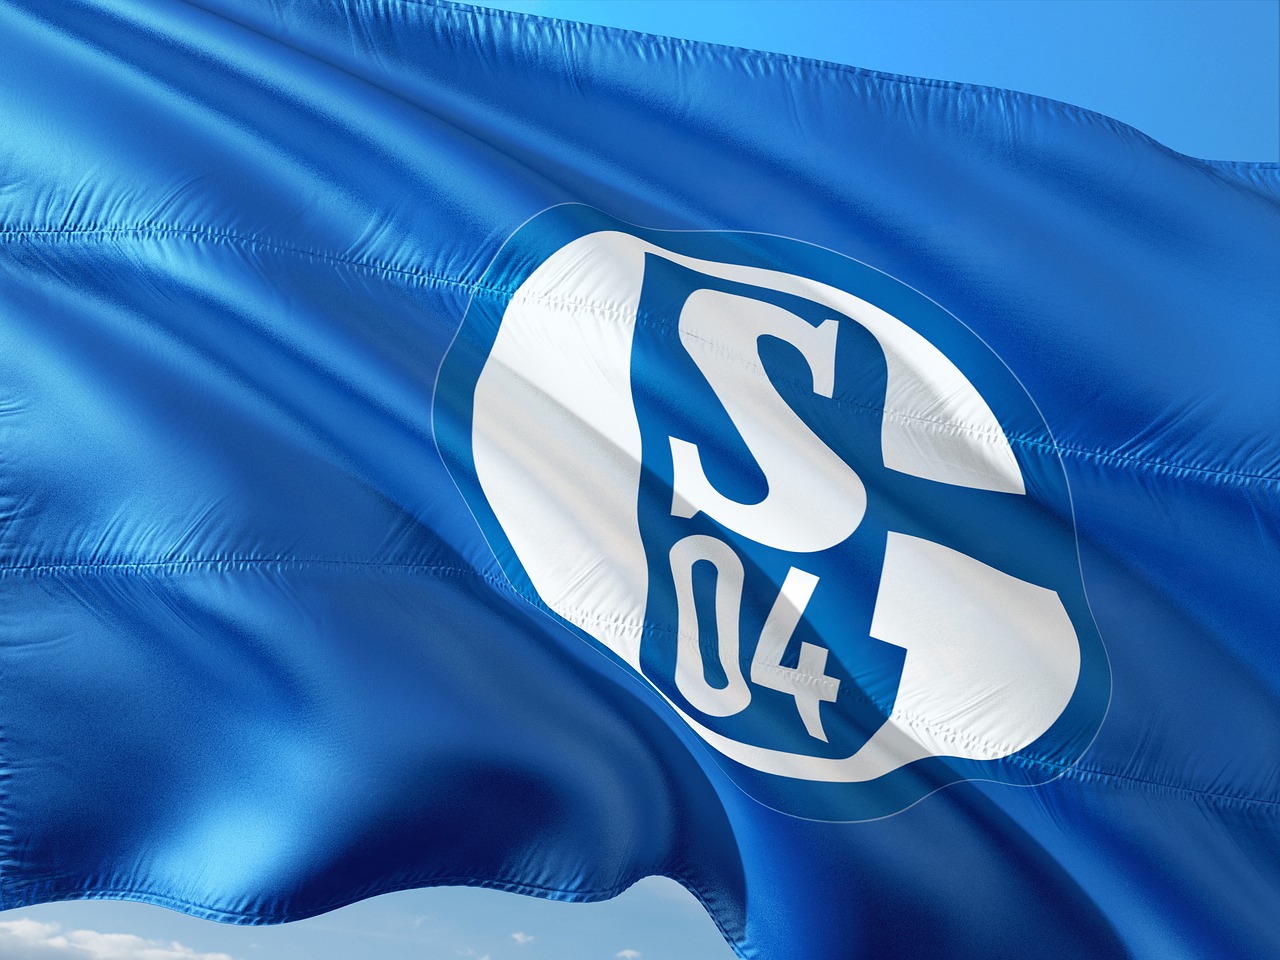 FC Schalke finally won